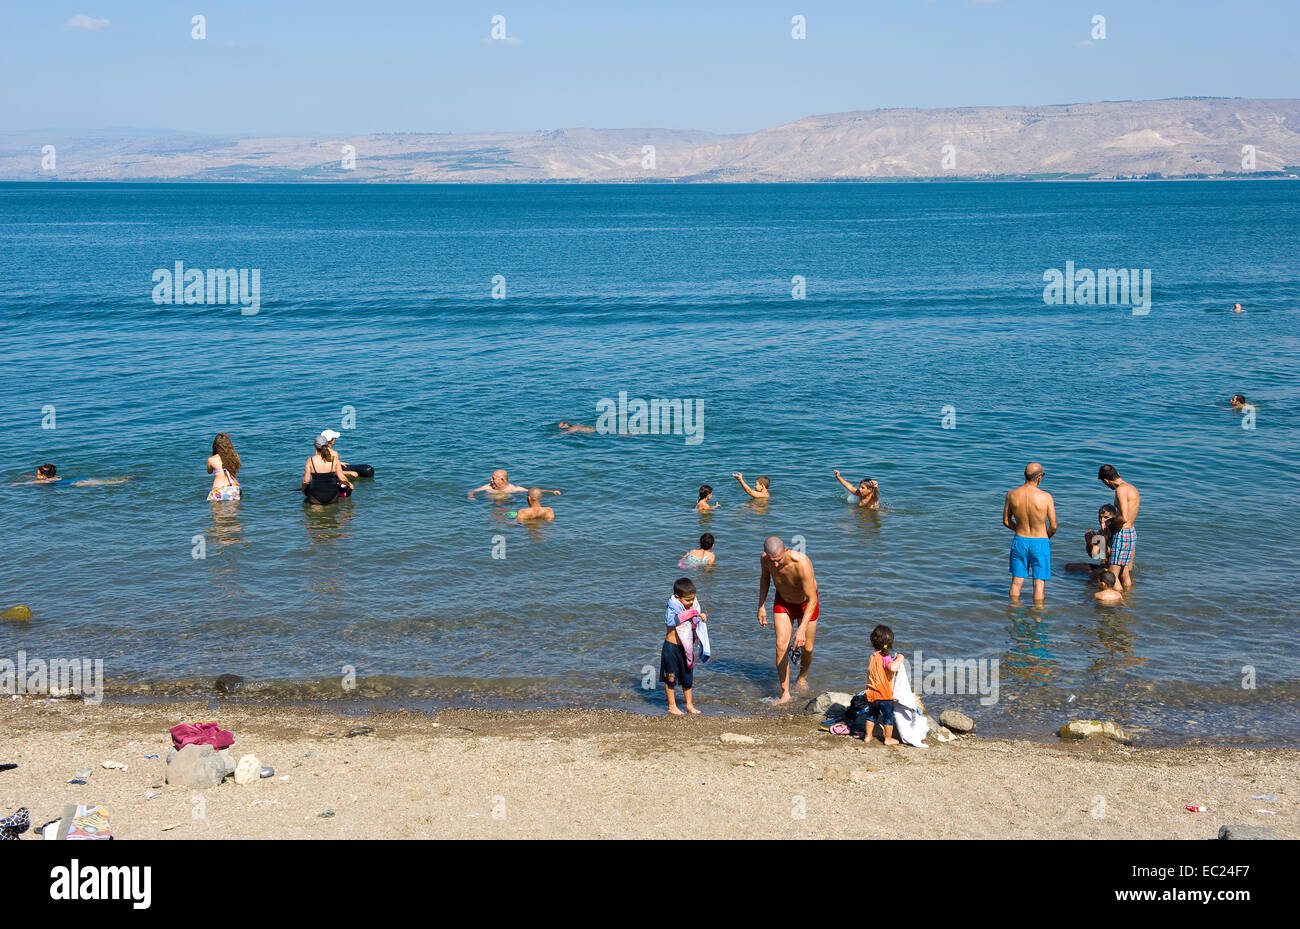 Les gens nagent dans la mer de Galilée, au sud de Tibériade Banque D'Images